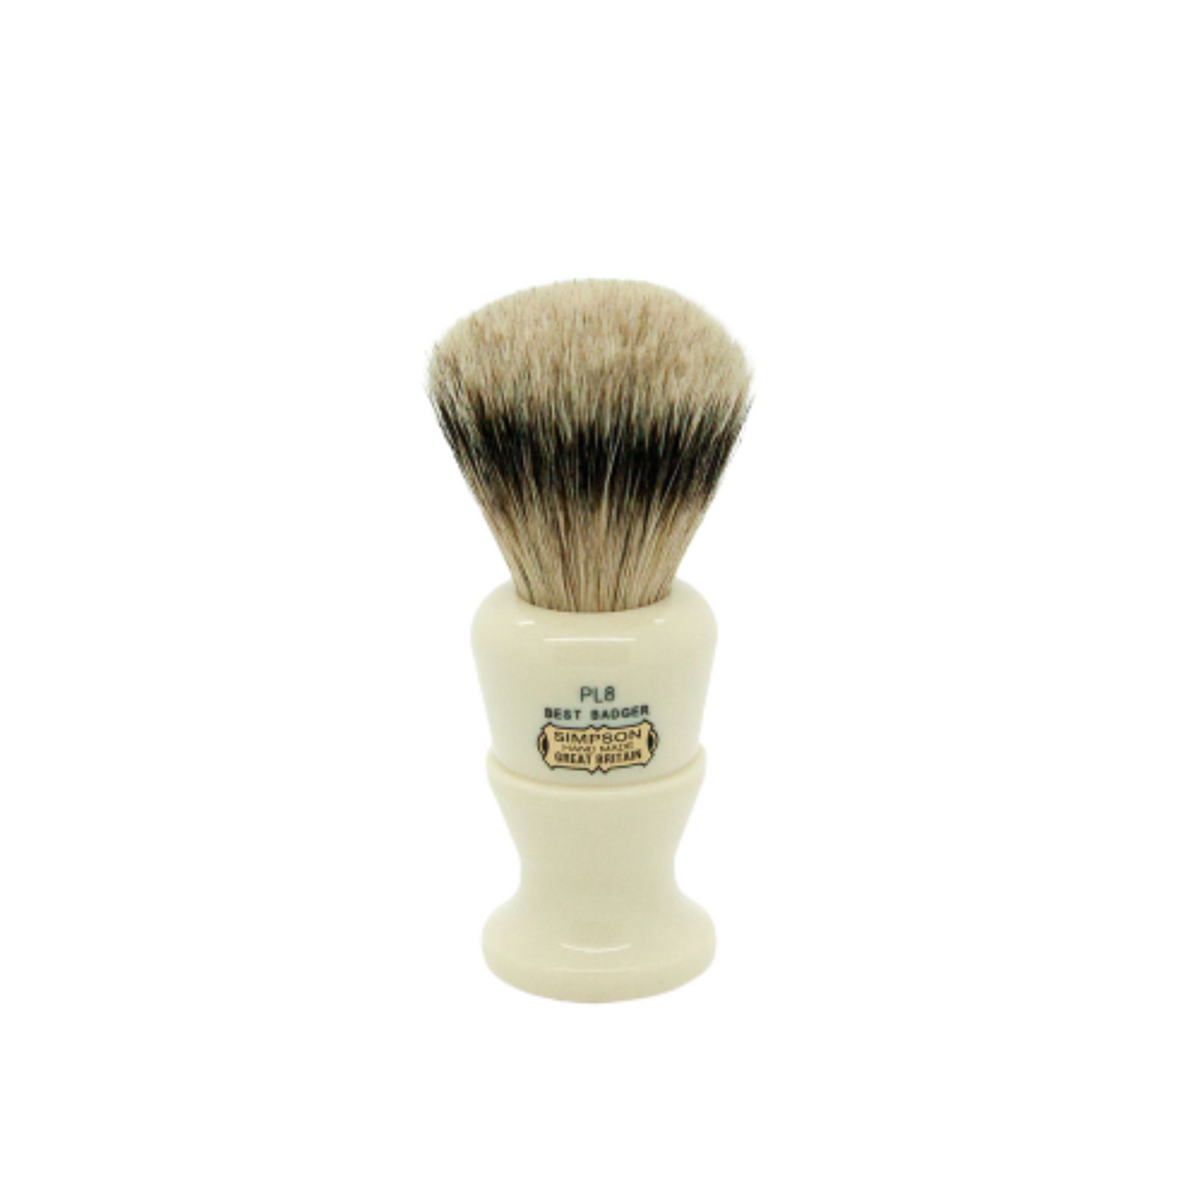 Primary Image of Polo PL8 Best Badger Shaving Brush